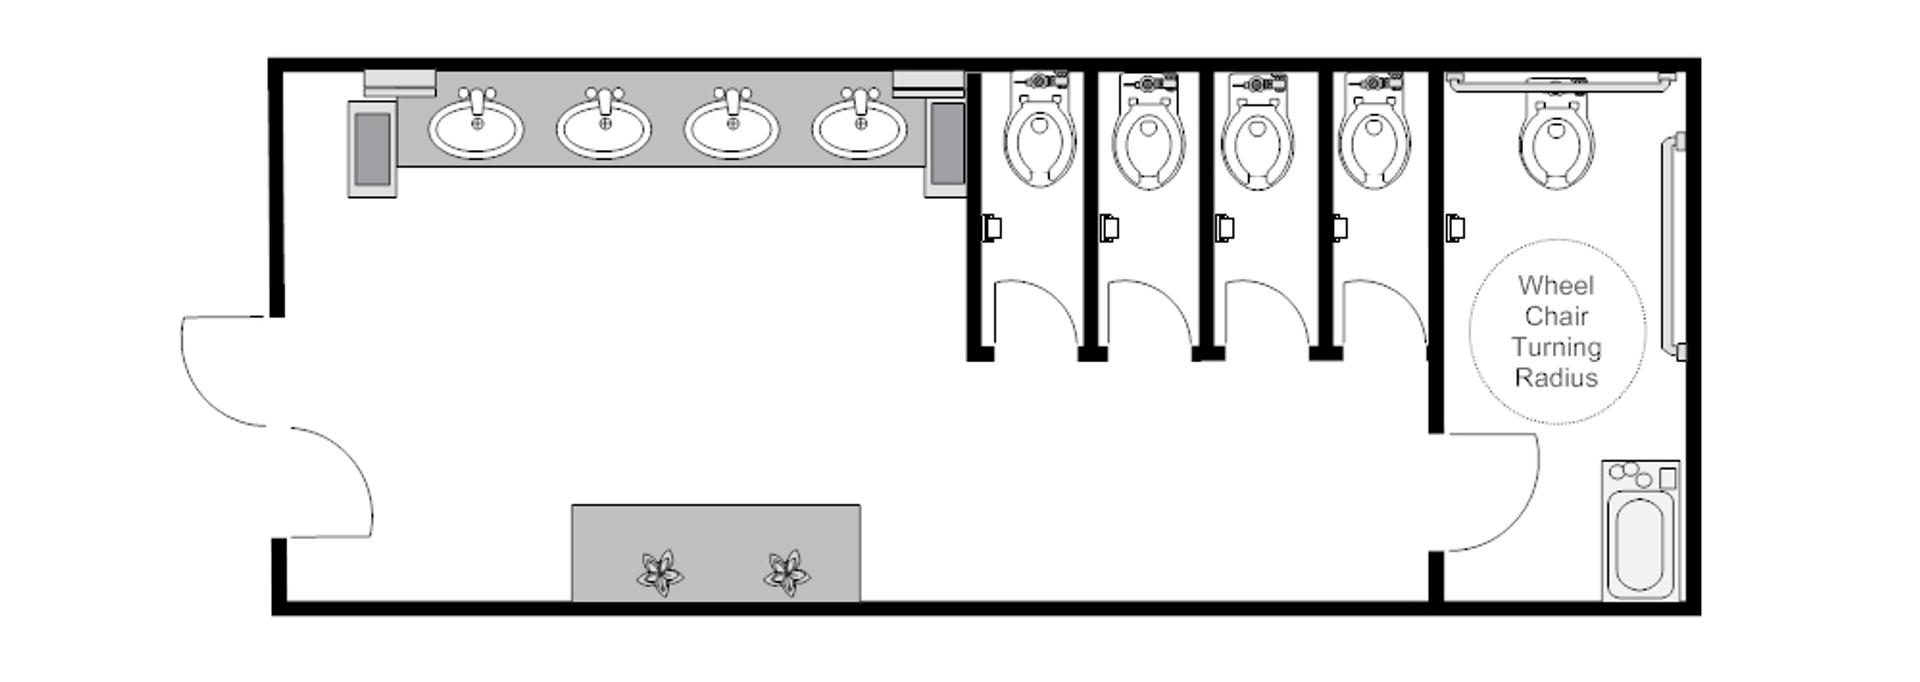 Restaurant public restroom floor plan